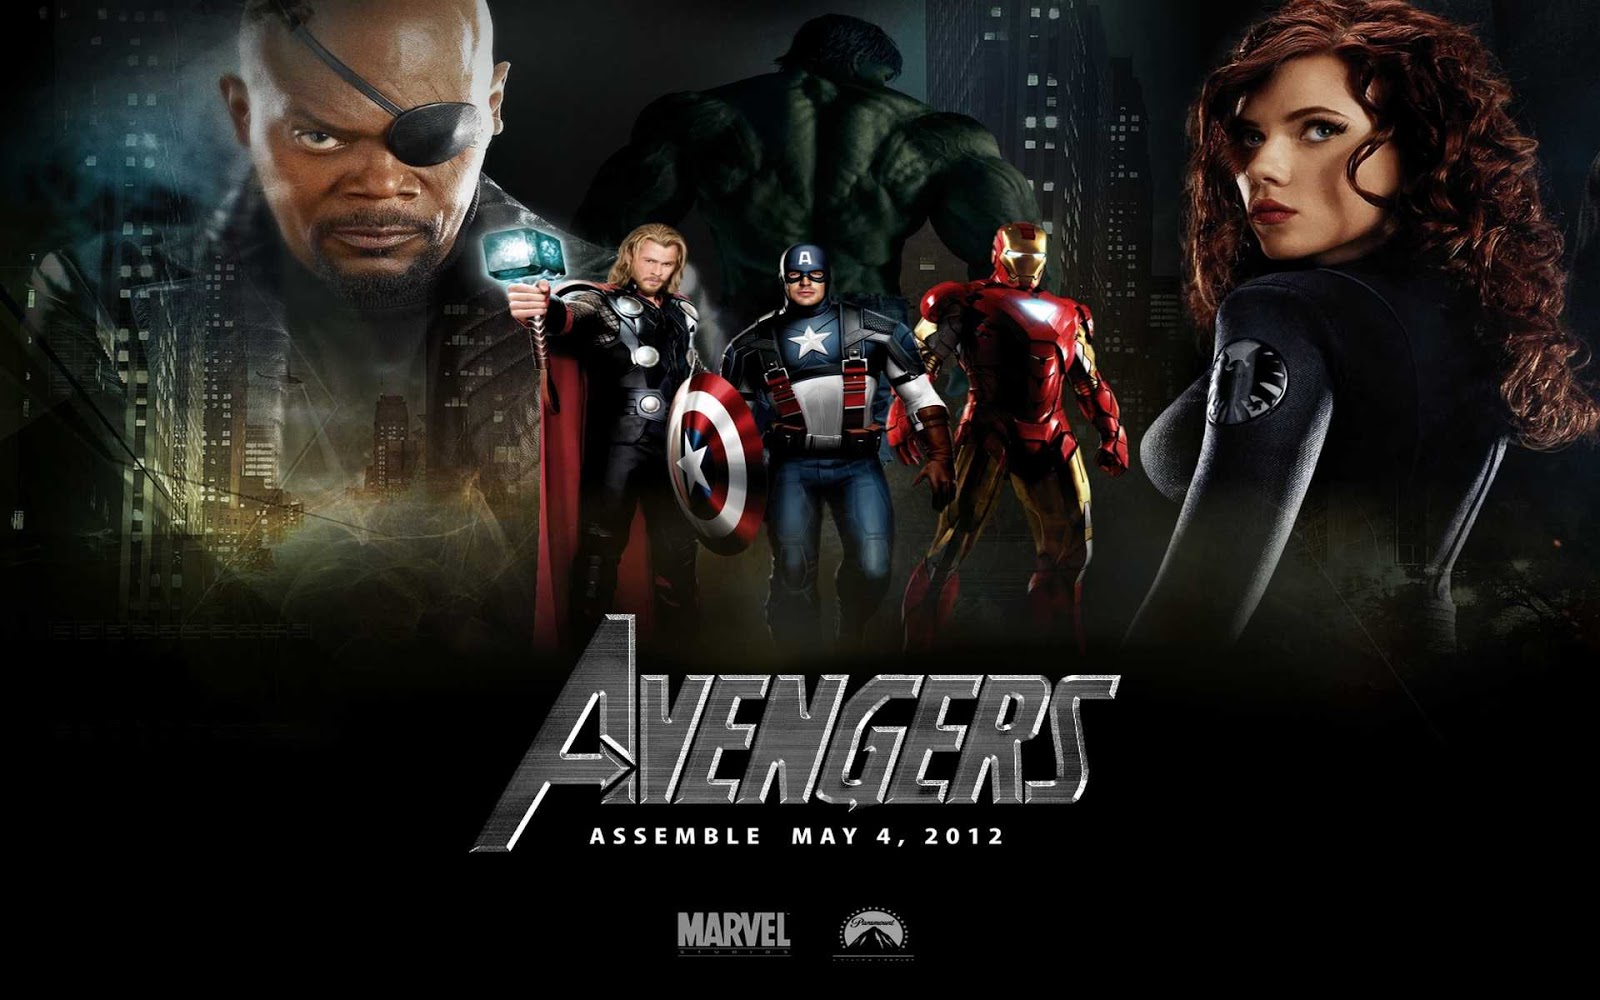  Avengers Movie Desktop Wallpaper Avengers Wallpapers   HD Wallpapers